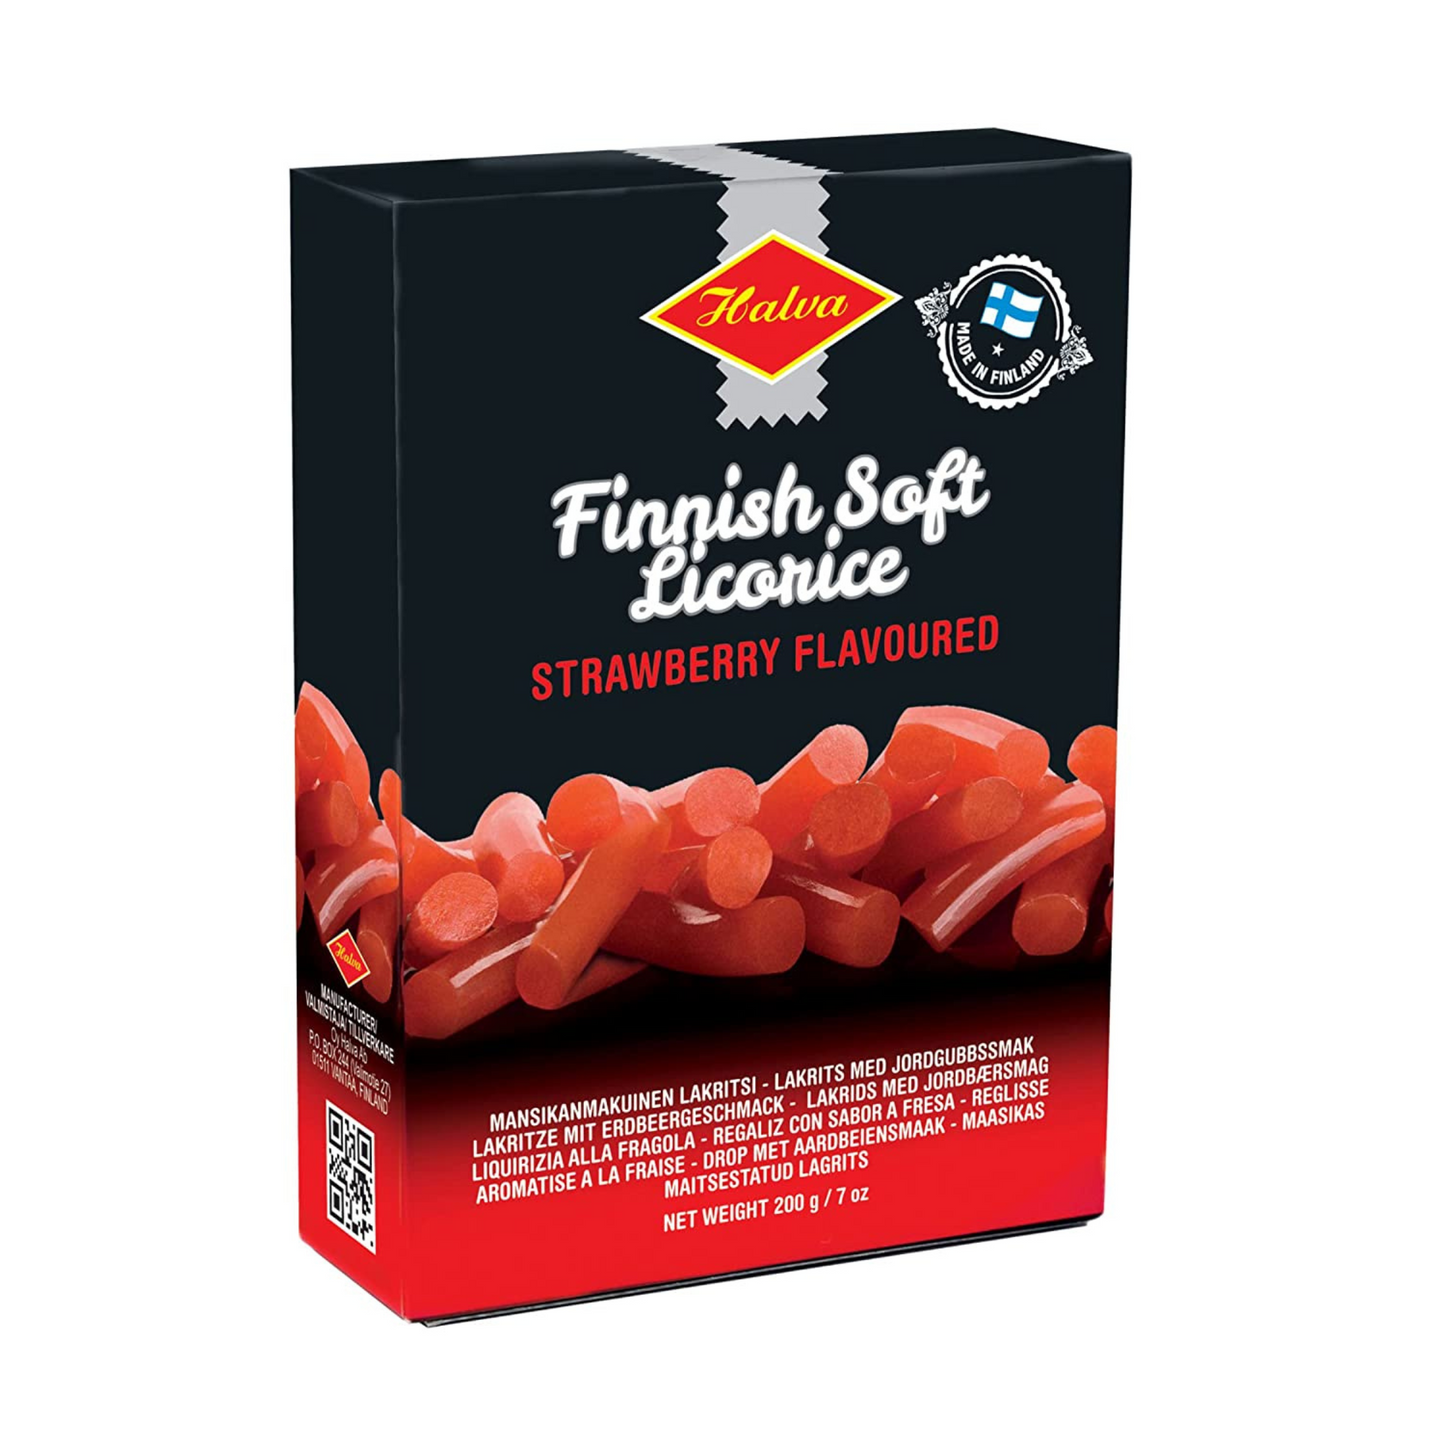 Primary Image of Halva Red Finnish Sweet Strawberry Licorice (7 oz)